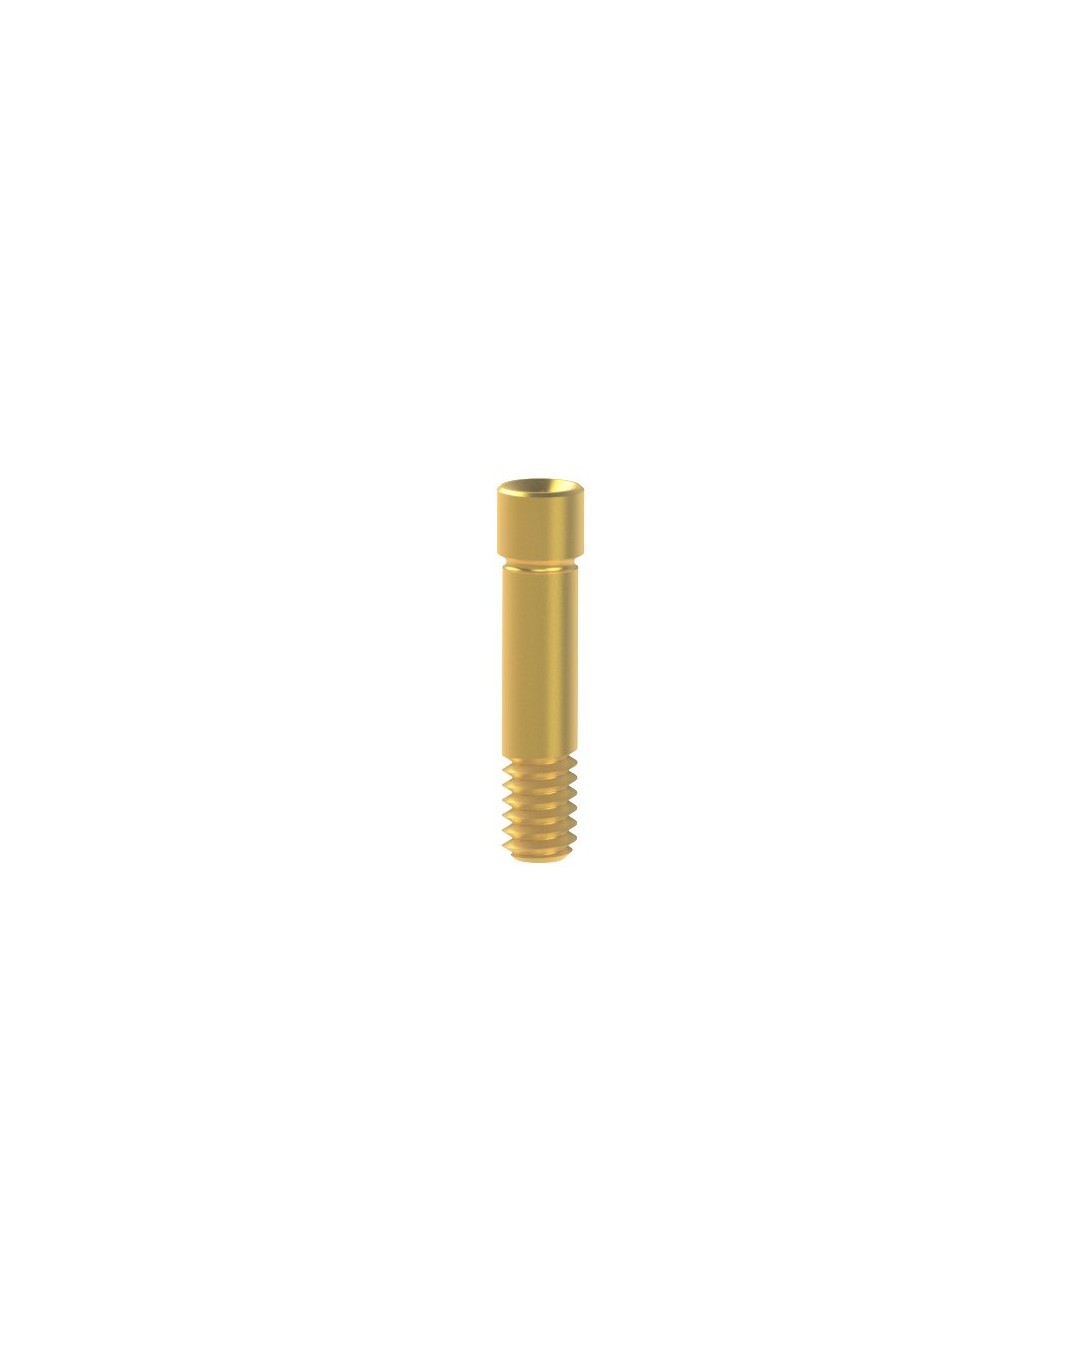 Titanium Screw compatible with Megagen® AnyOne®